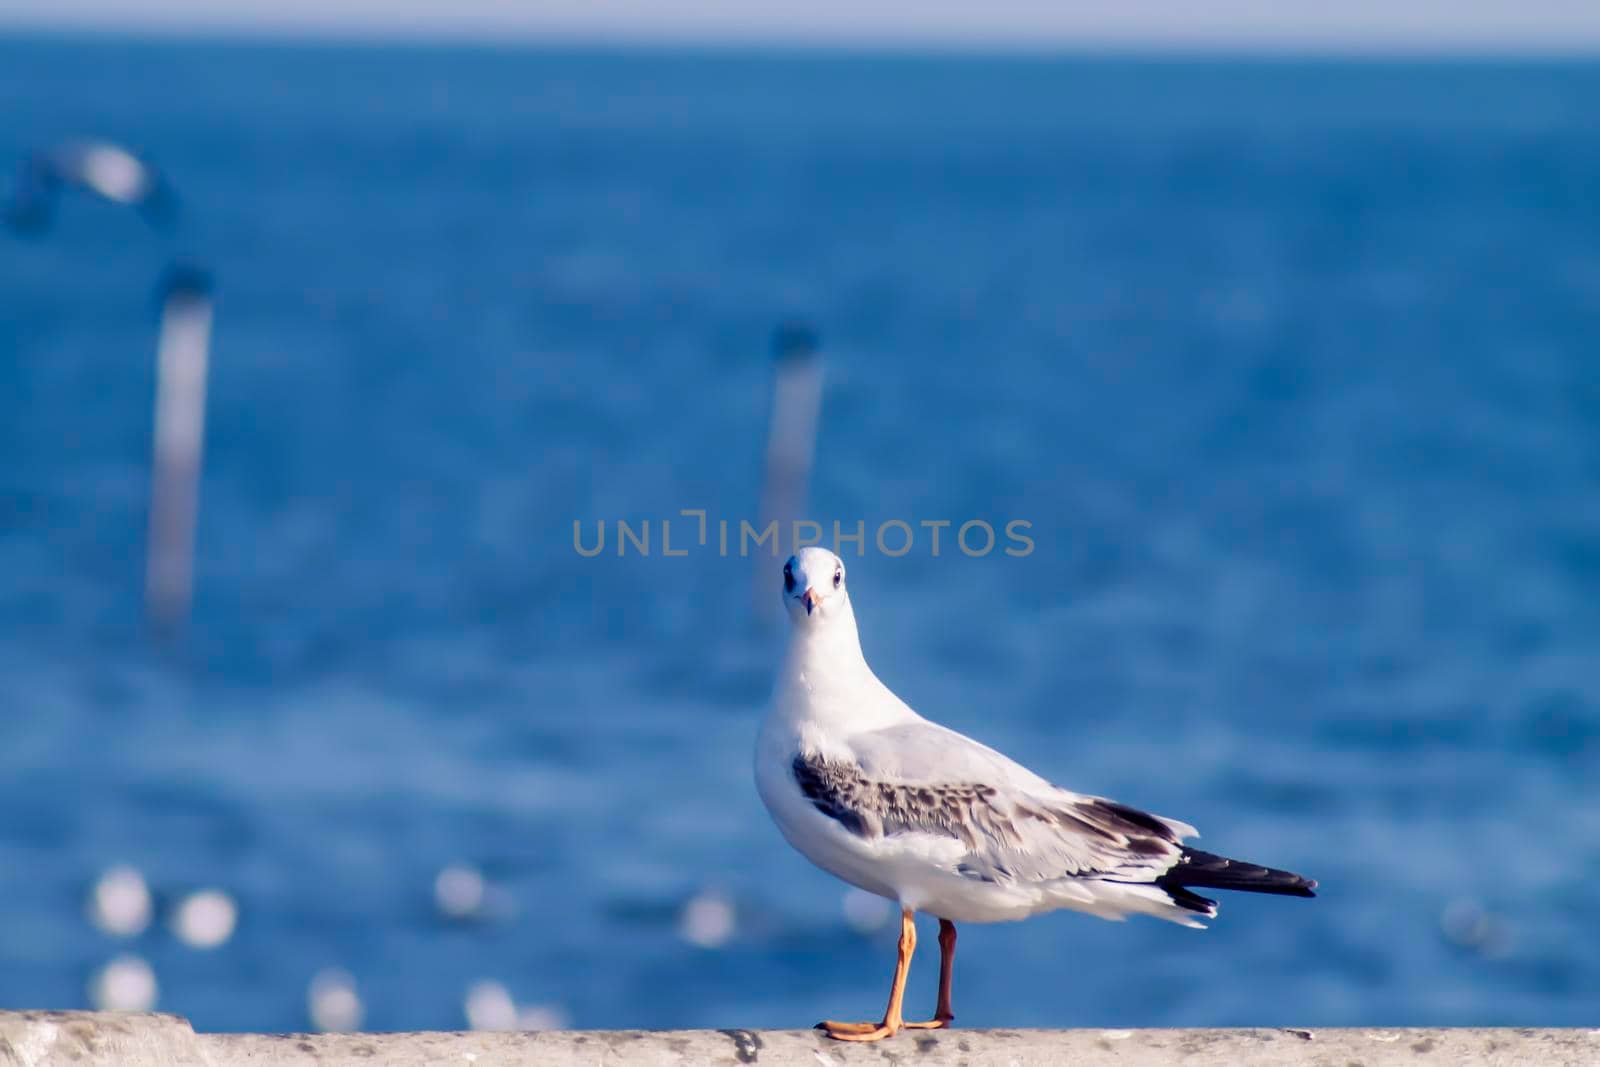 Seagull portrait animal wildlife over blur blue sea nature background